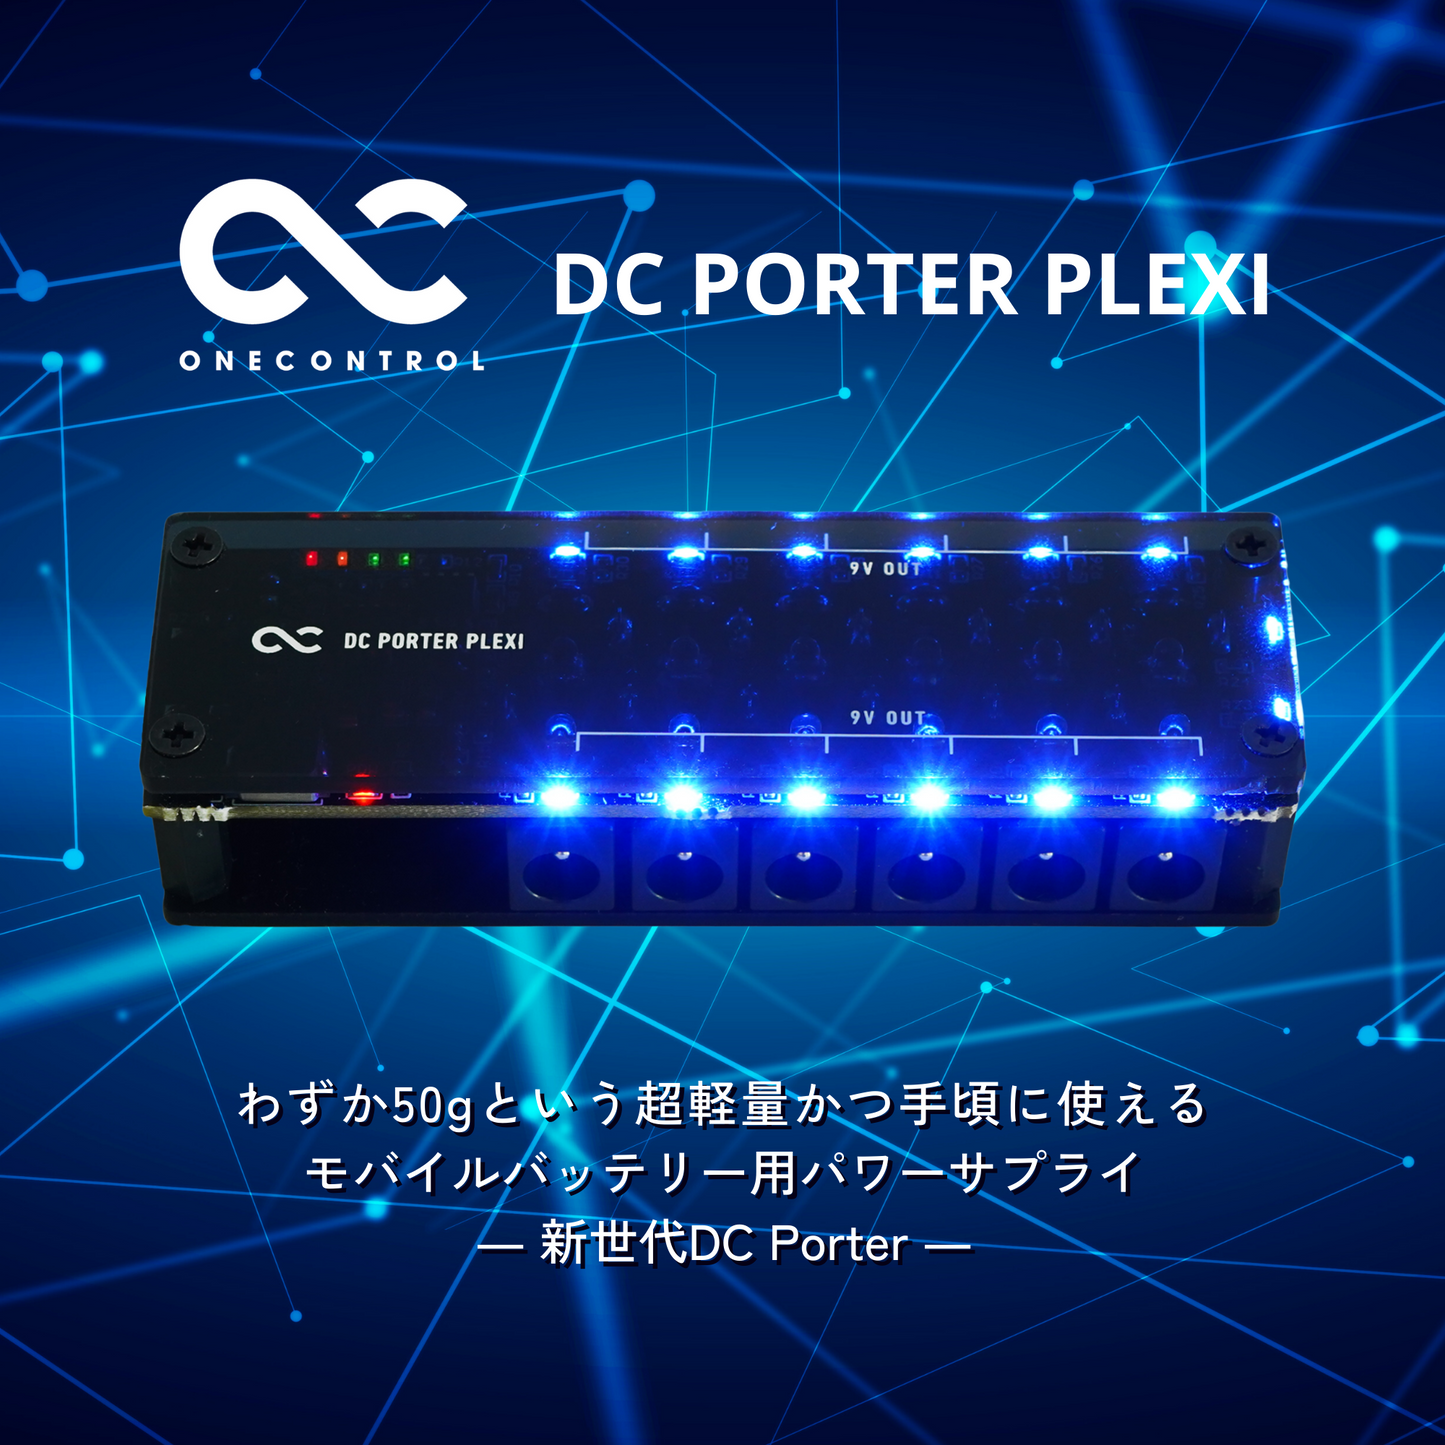 One Control DC PORTER PLEXI